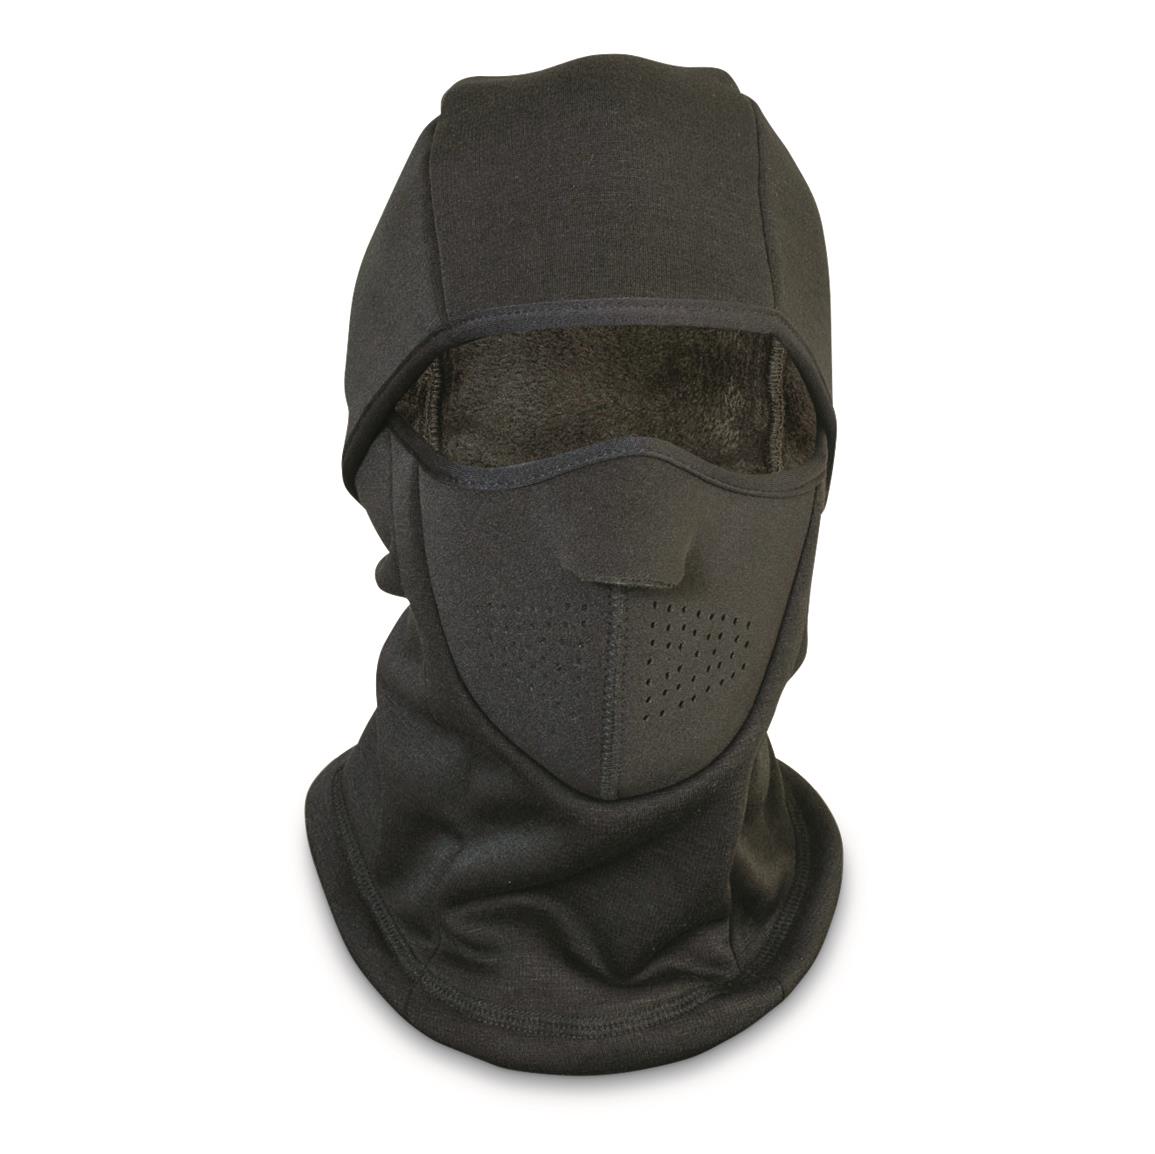 Red Rock Outdoor Gear 3-Way Fleece Facemask, Black